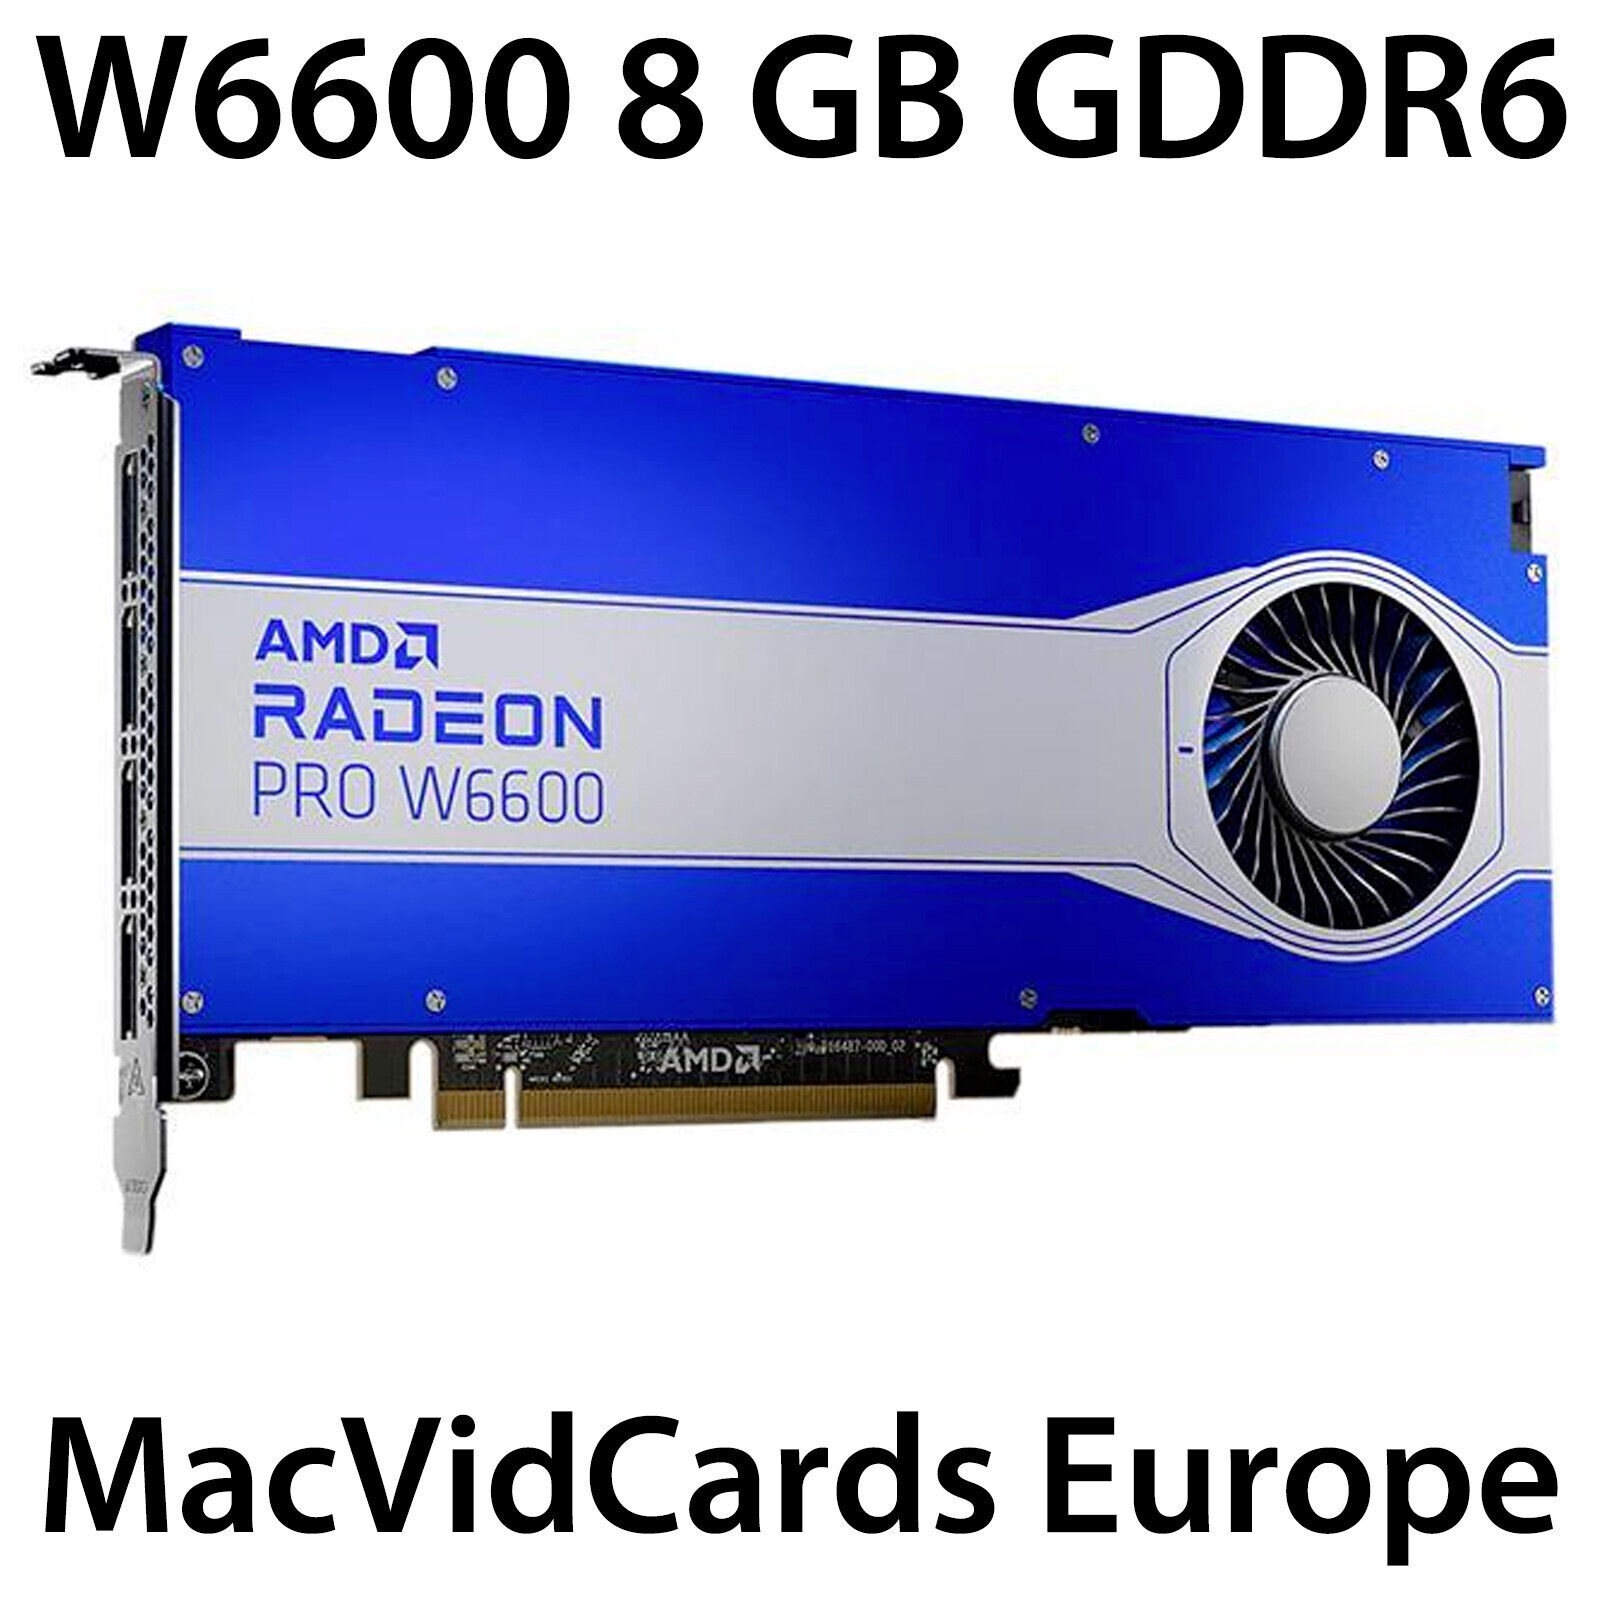 MacVidCards AMD Radeon PRO W6600 8 GB GDDR6 for Apple Mac Pro 5,1 + BOOT SCREEN